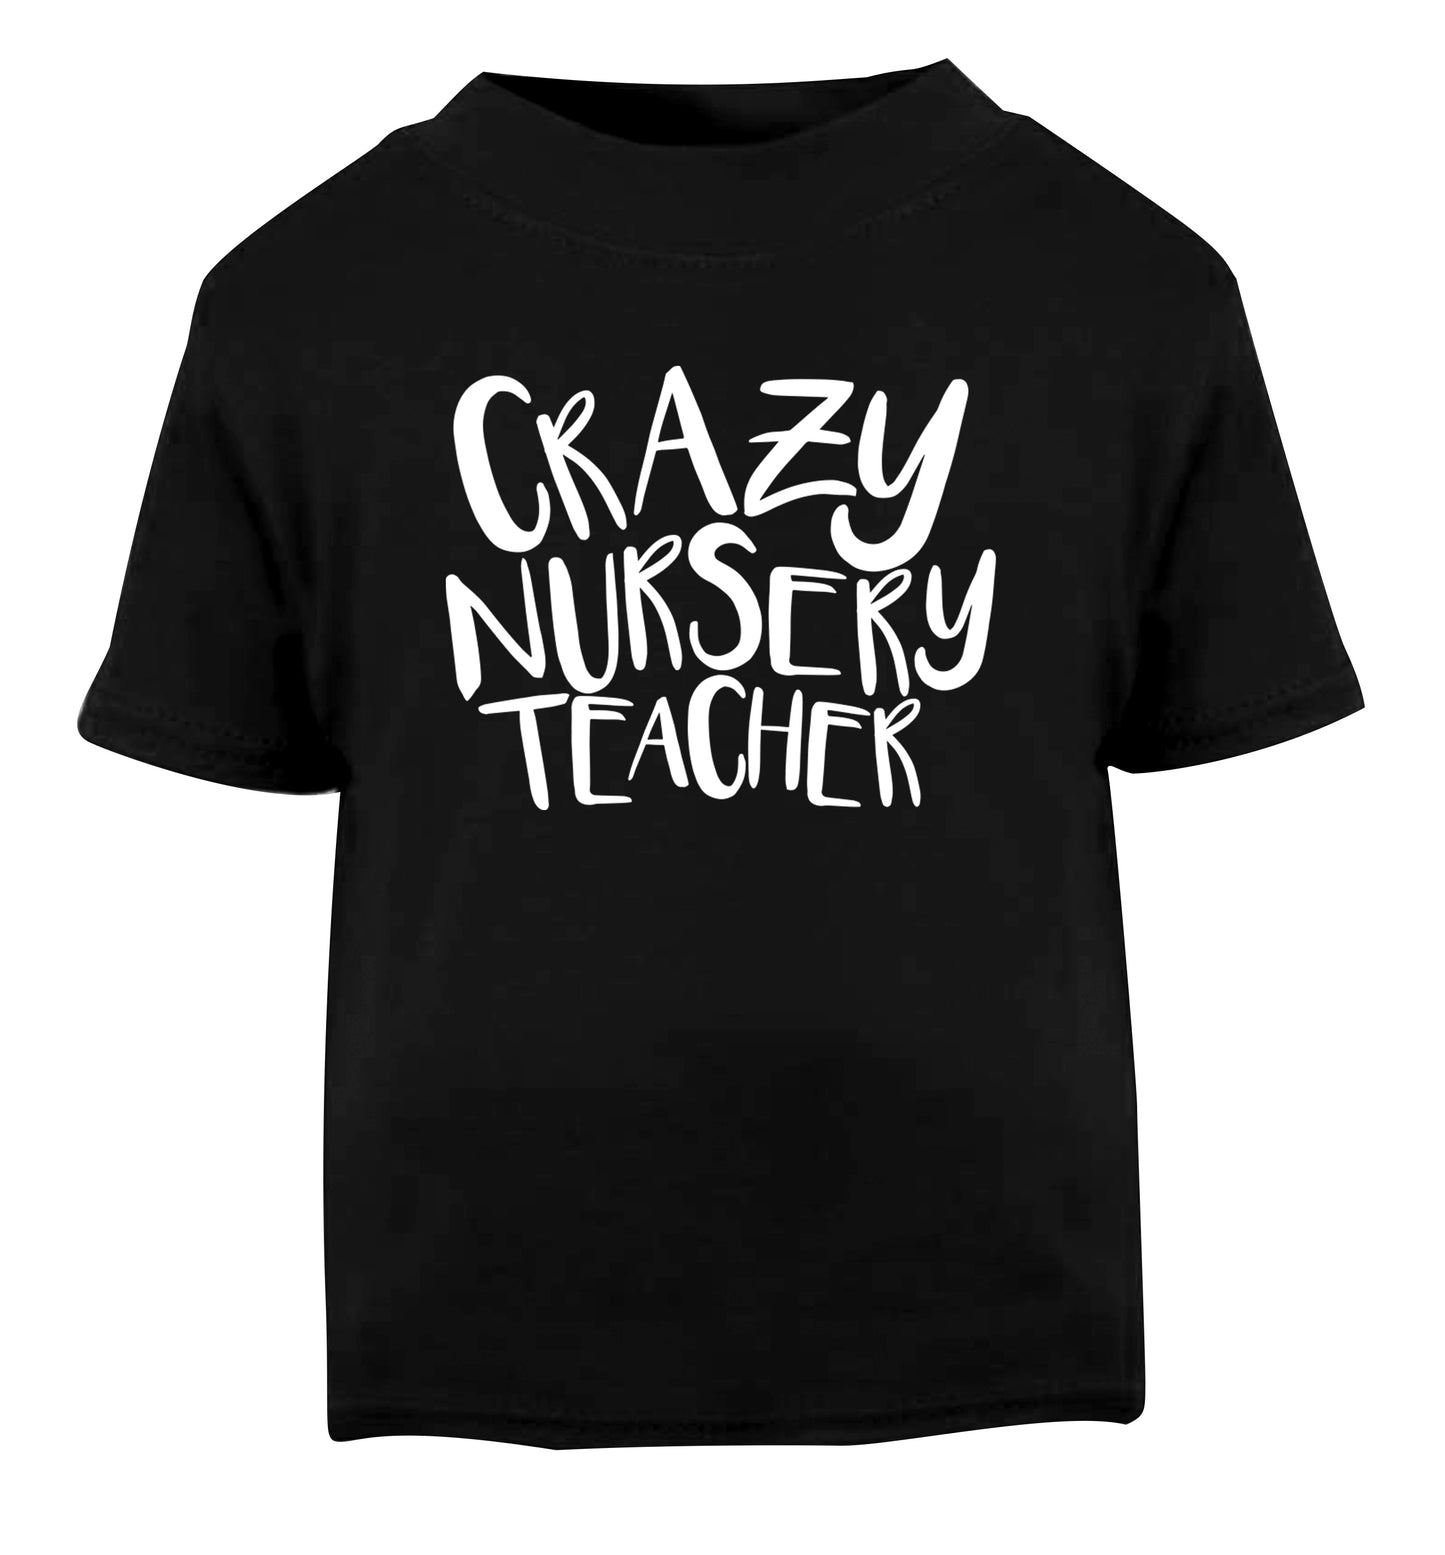 Crazy nursery teacher Black Baby Toddler Tshirt 2 years